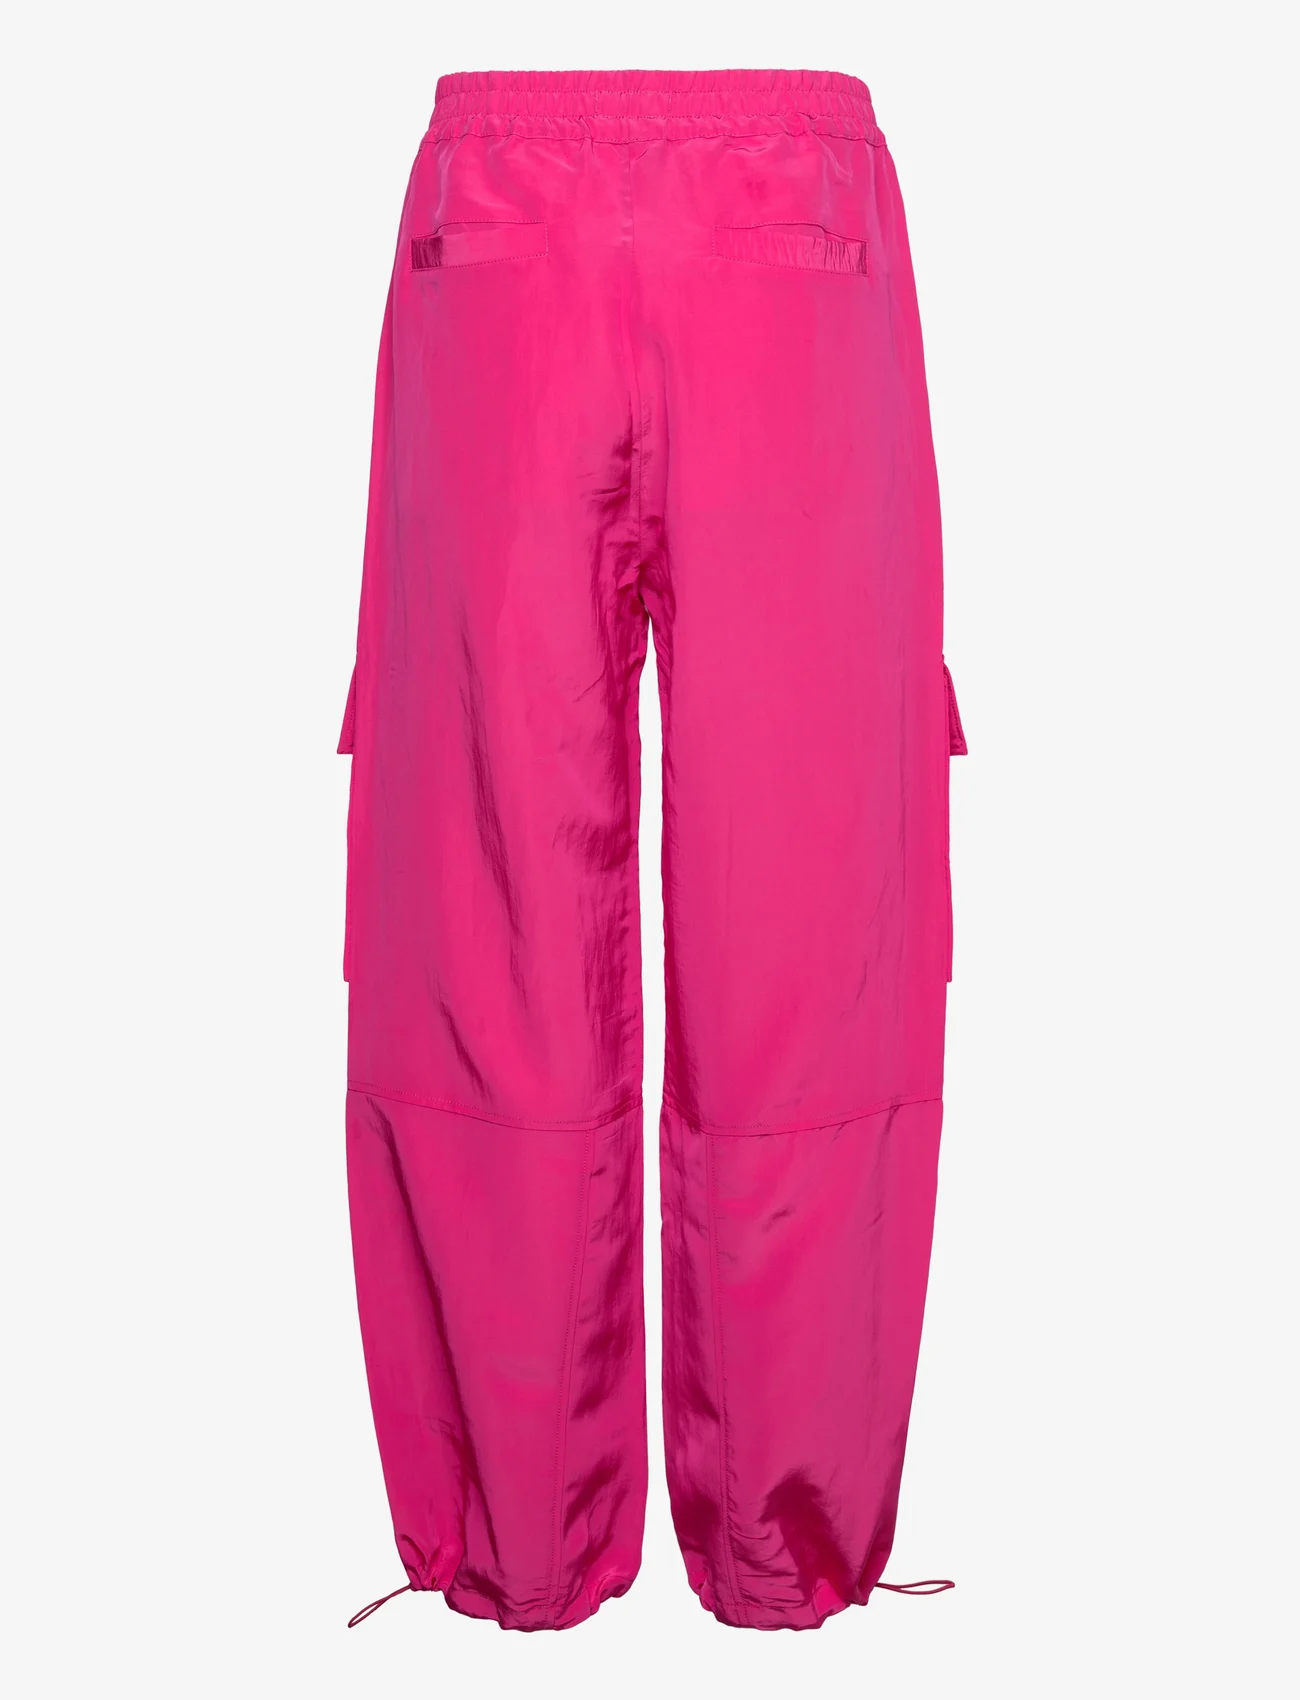 RODEBJER - Rodebjer Hayden - cargo pants - hot pink - 1